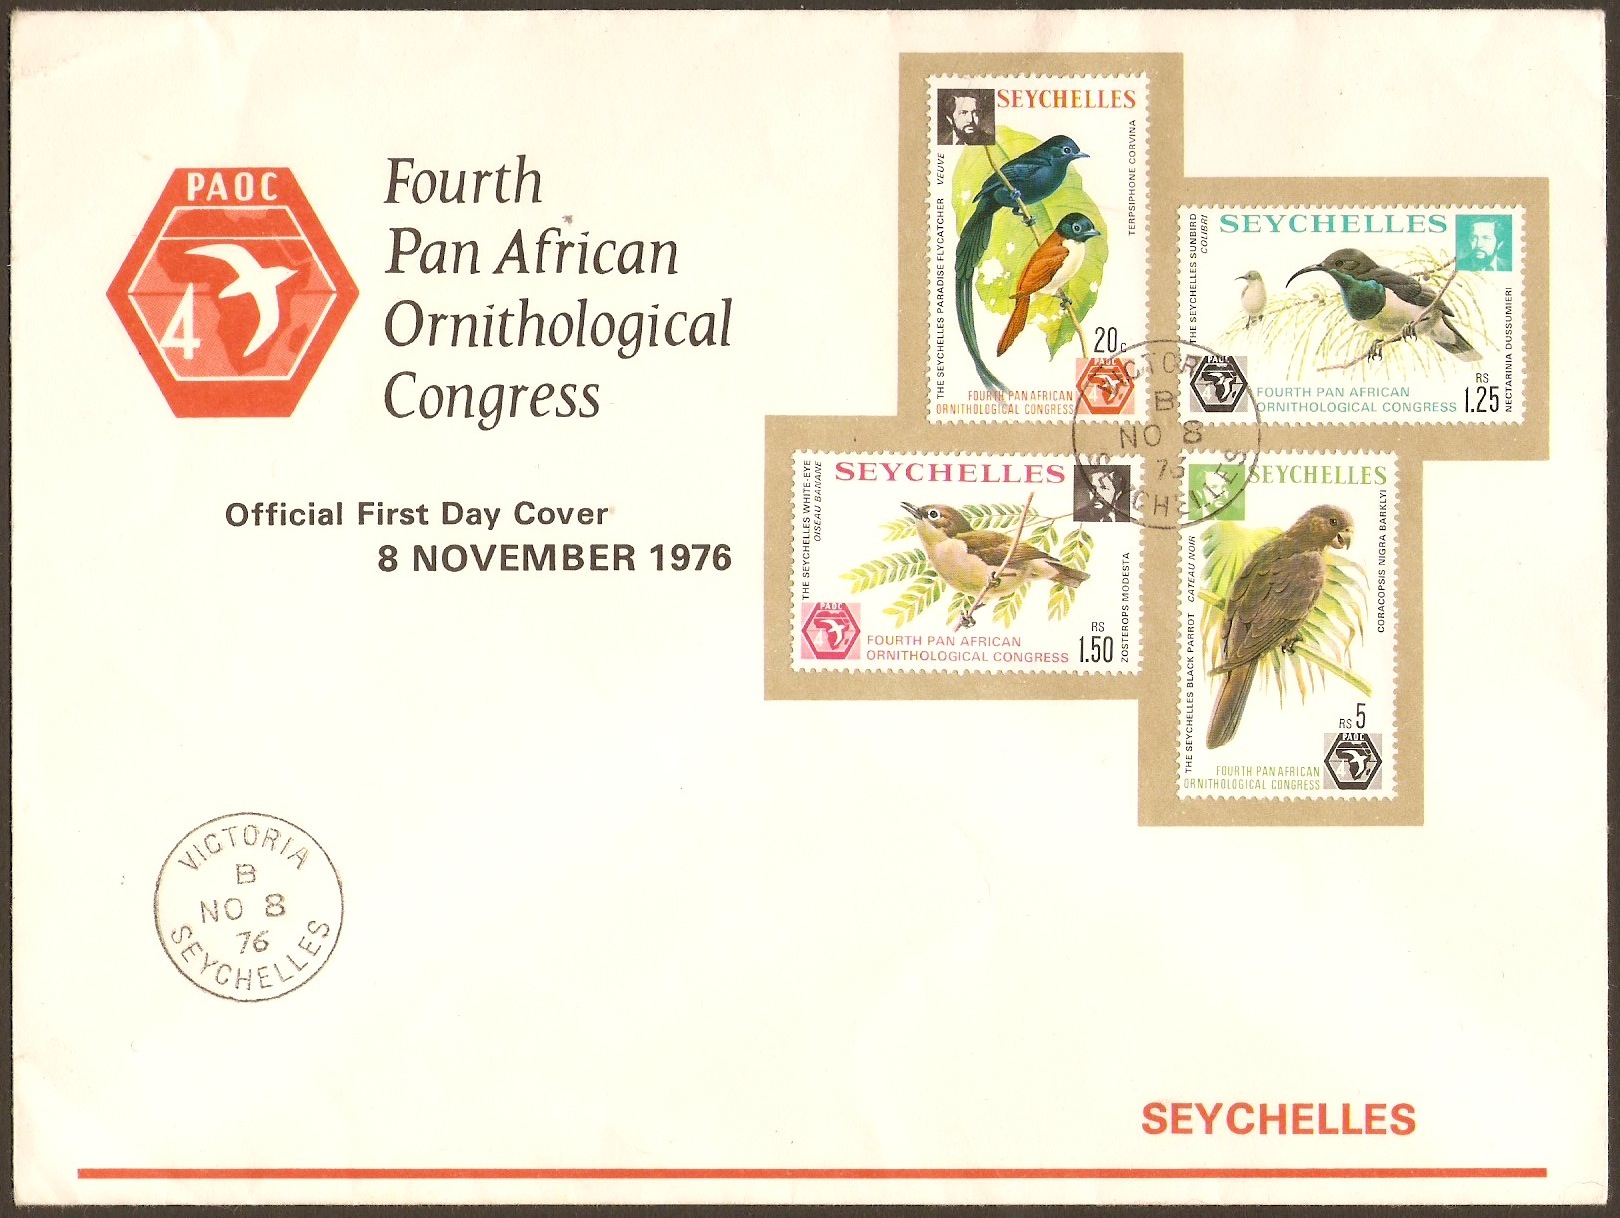 Seychelles Postal Ephemera